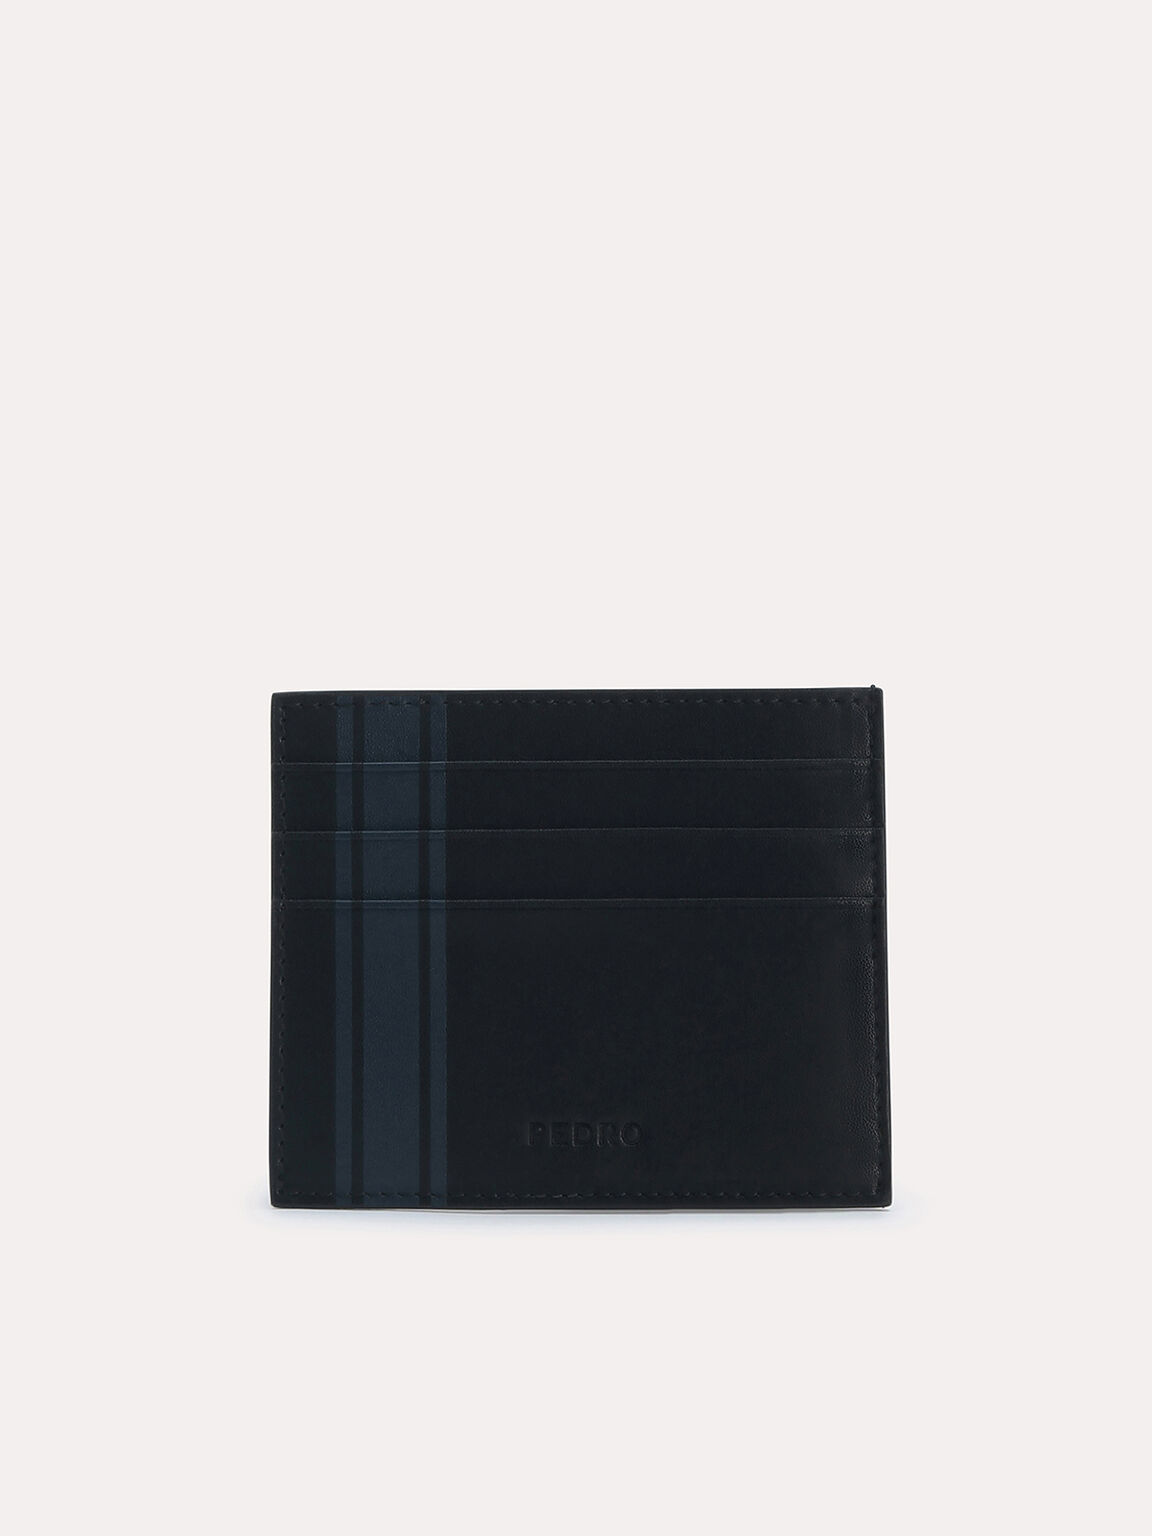 Two-Tone Leather Cardholder, Black, hi-res